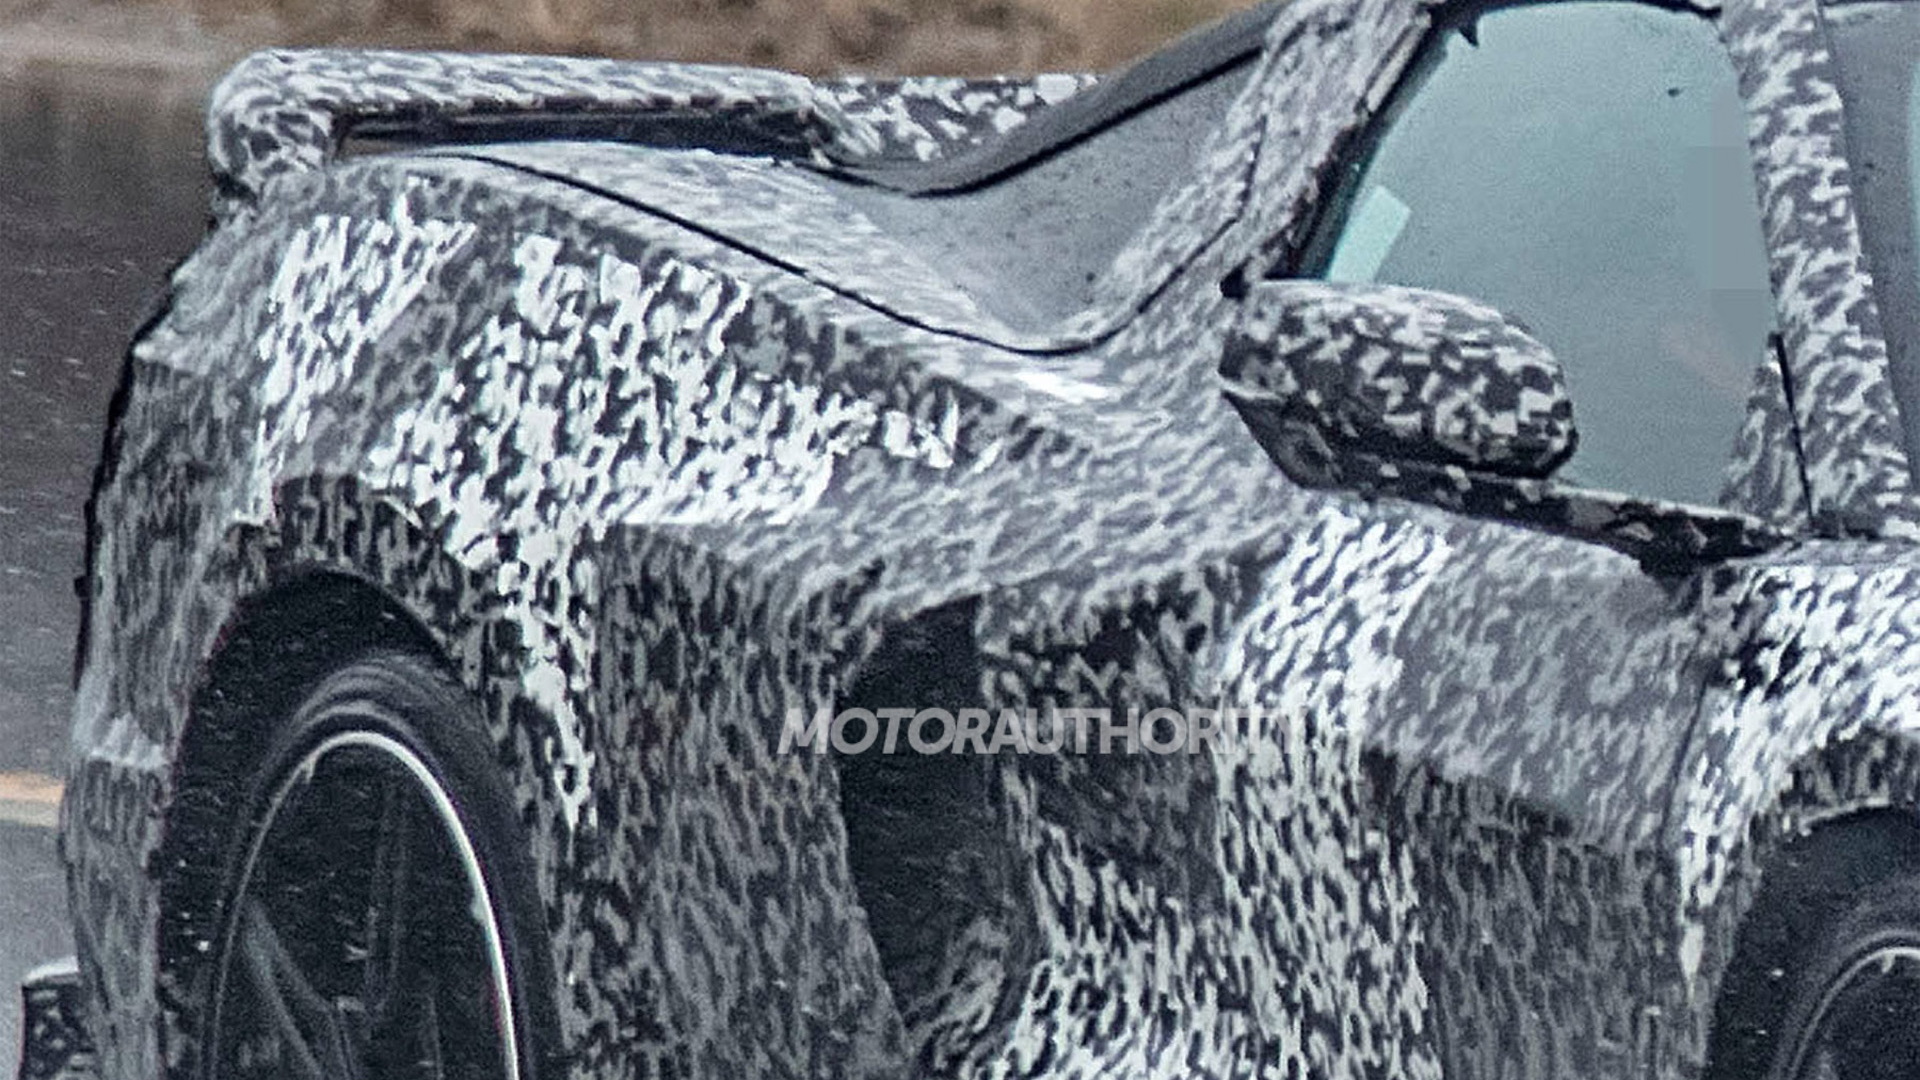 2020 Chevrolet Corvette (C8) spy shots - Image via S. Baldauf/SB-Medien